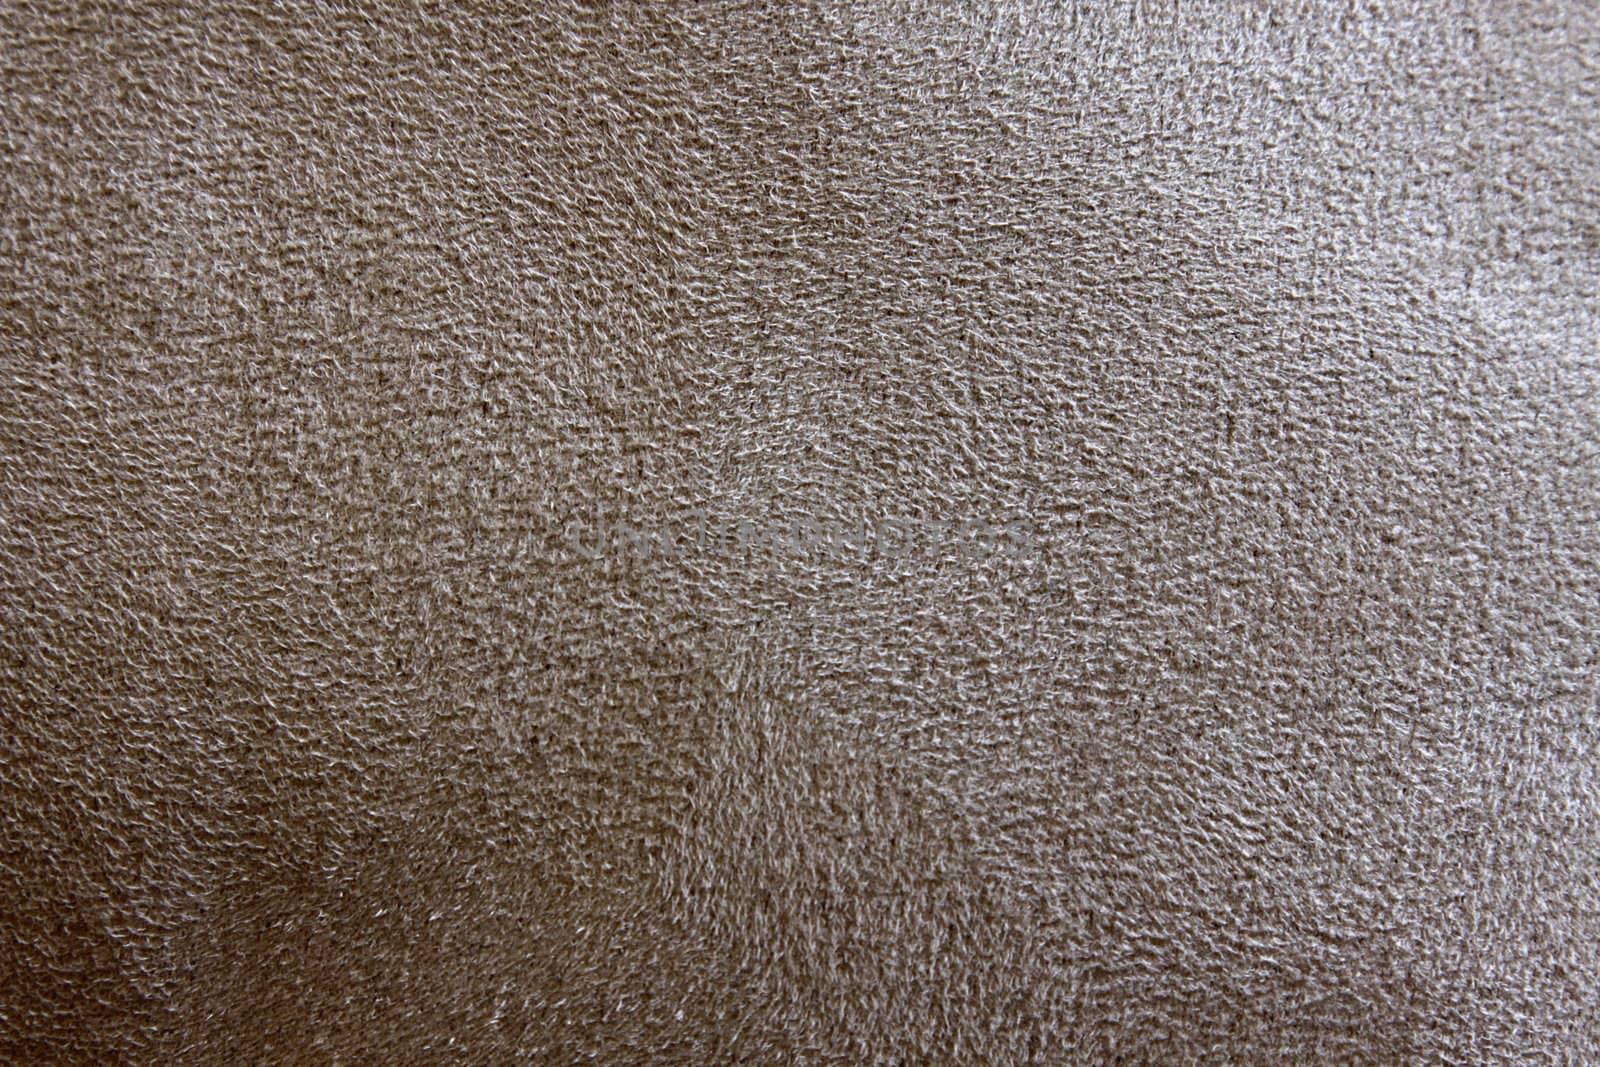 A close-up of a soft fluffy beige texture.